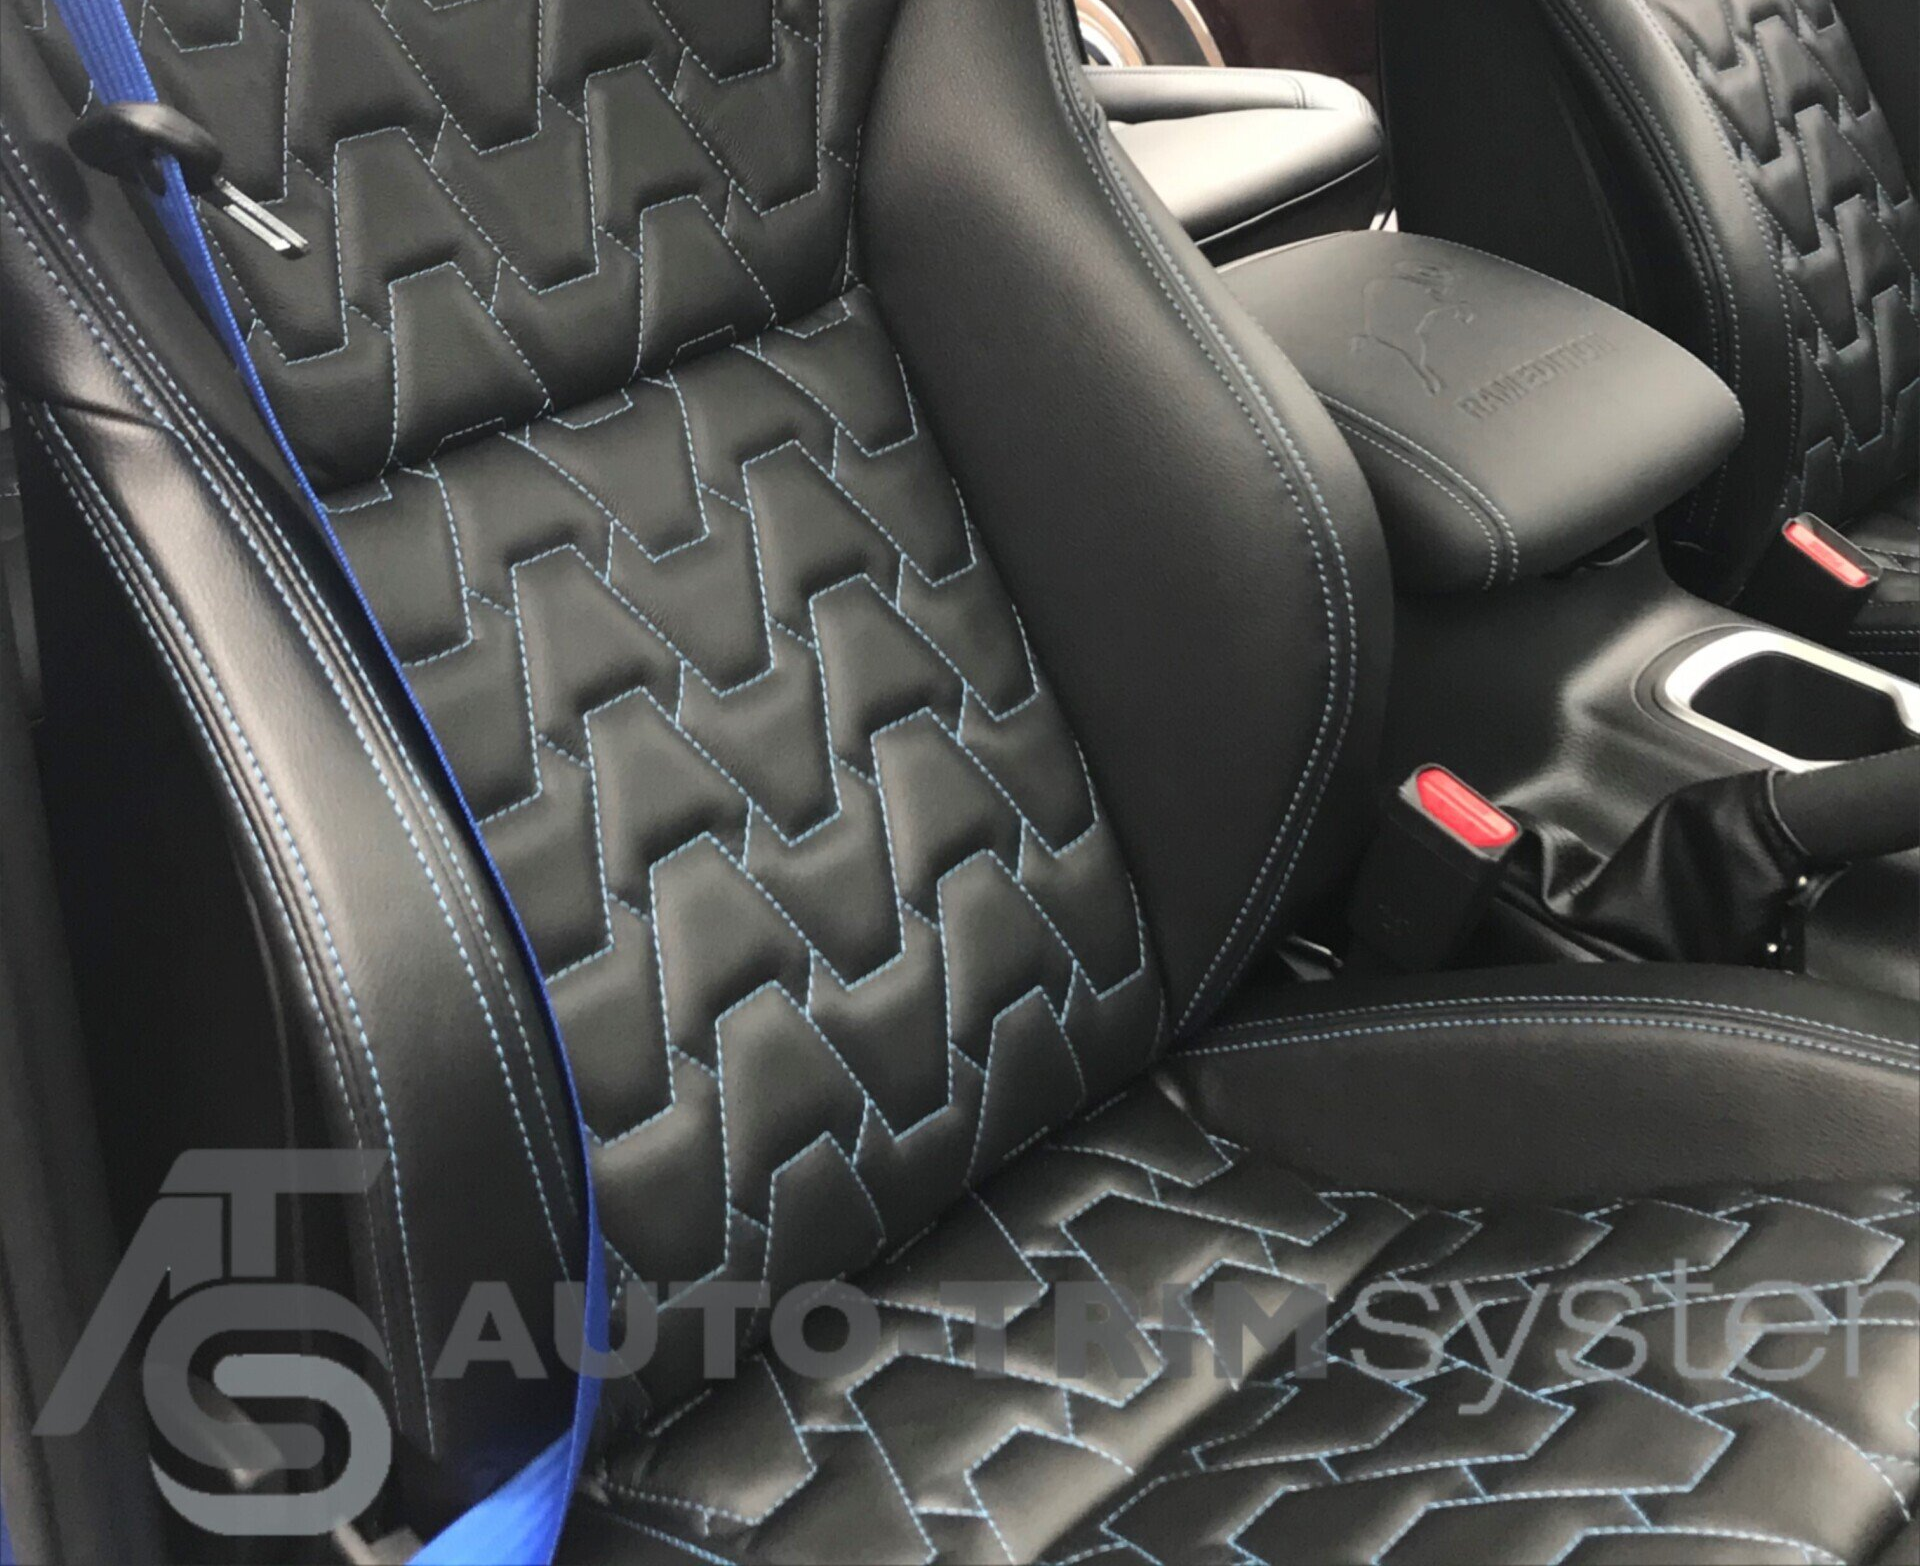 Customised black leather with blue pattern stitch on Recaro Sportster CS seats